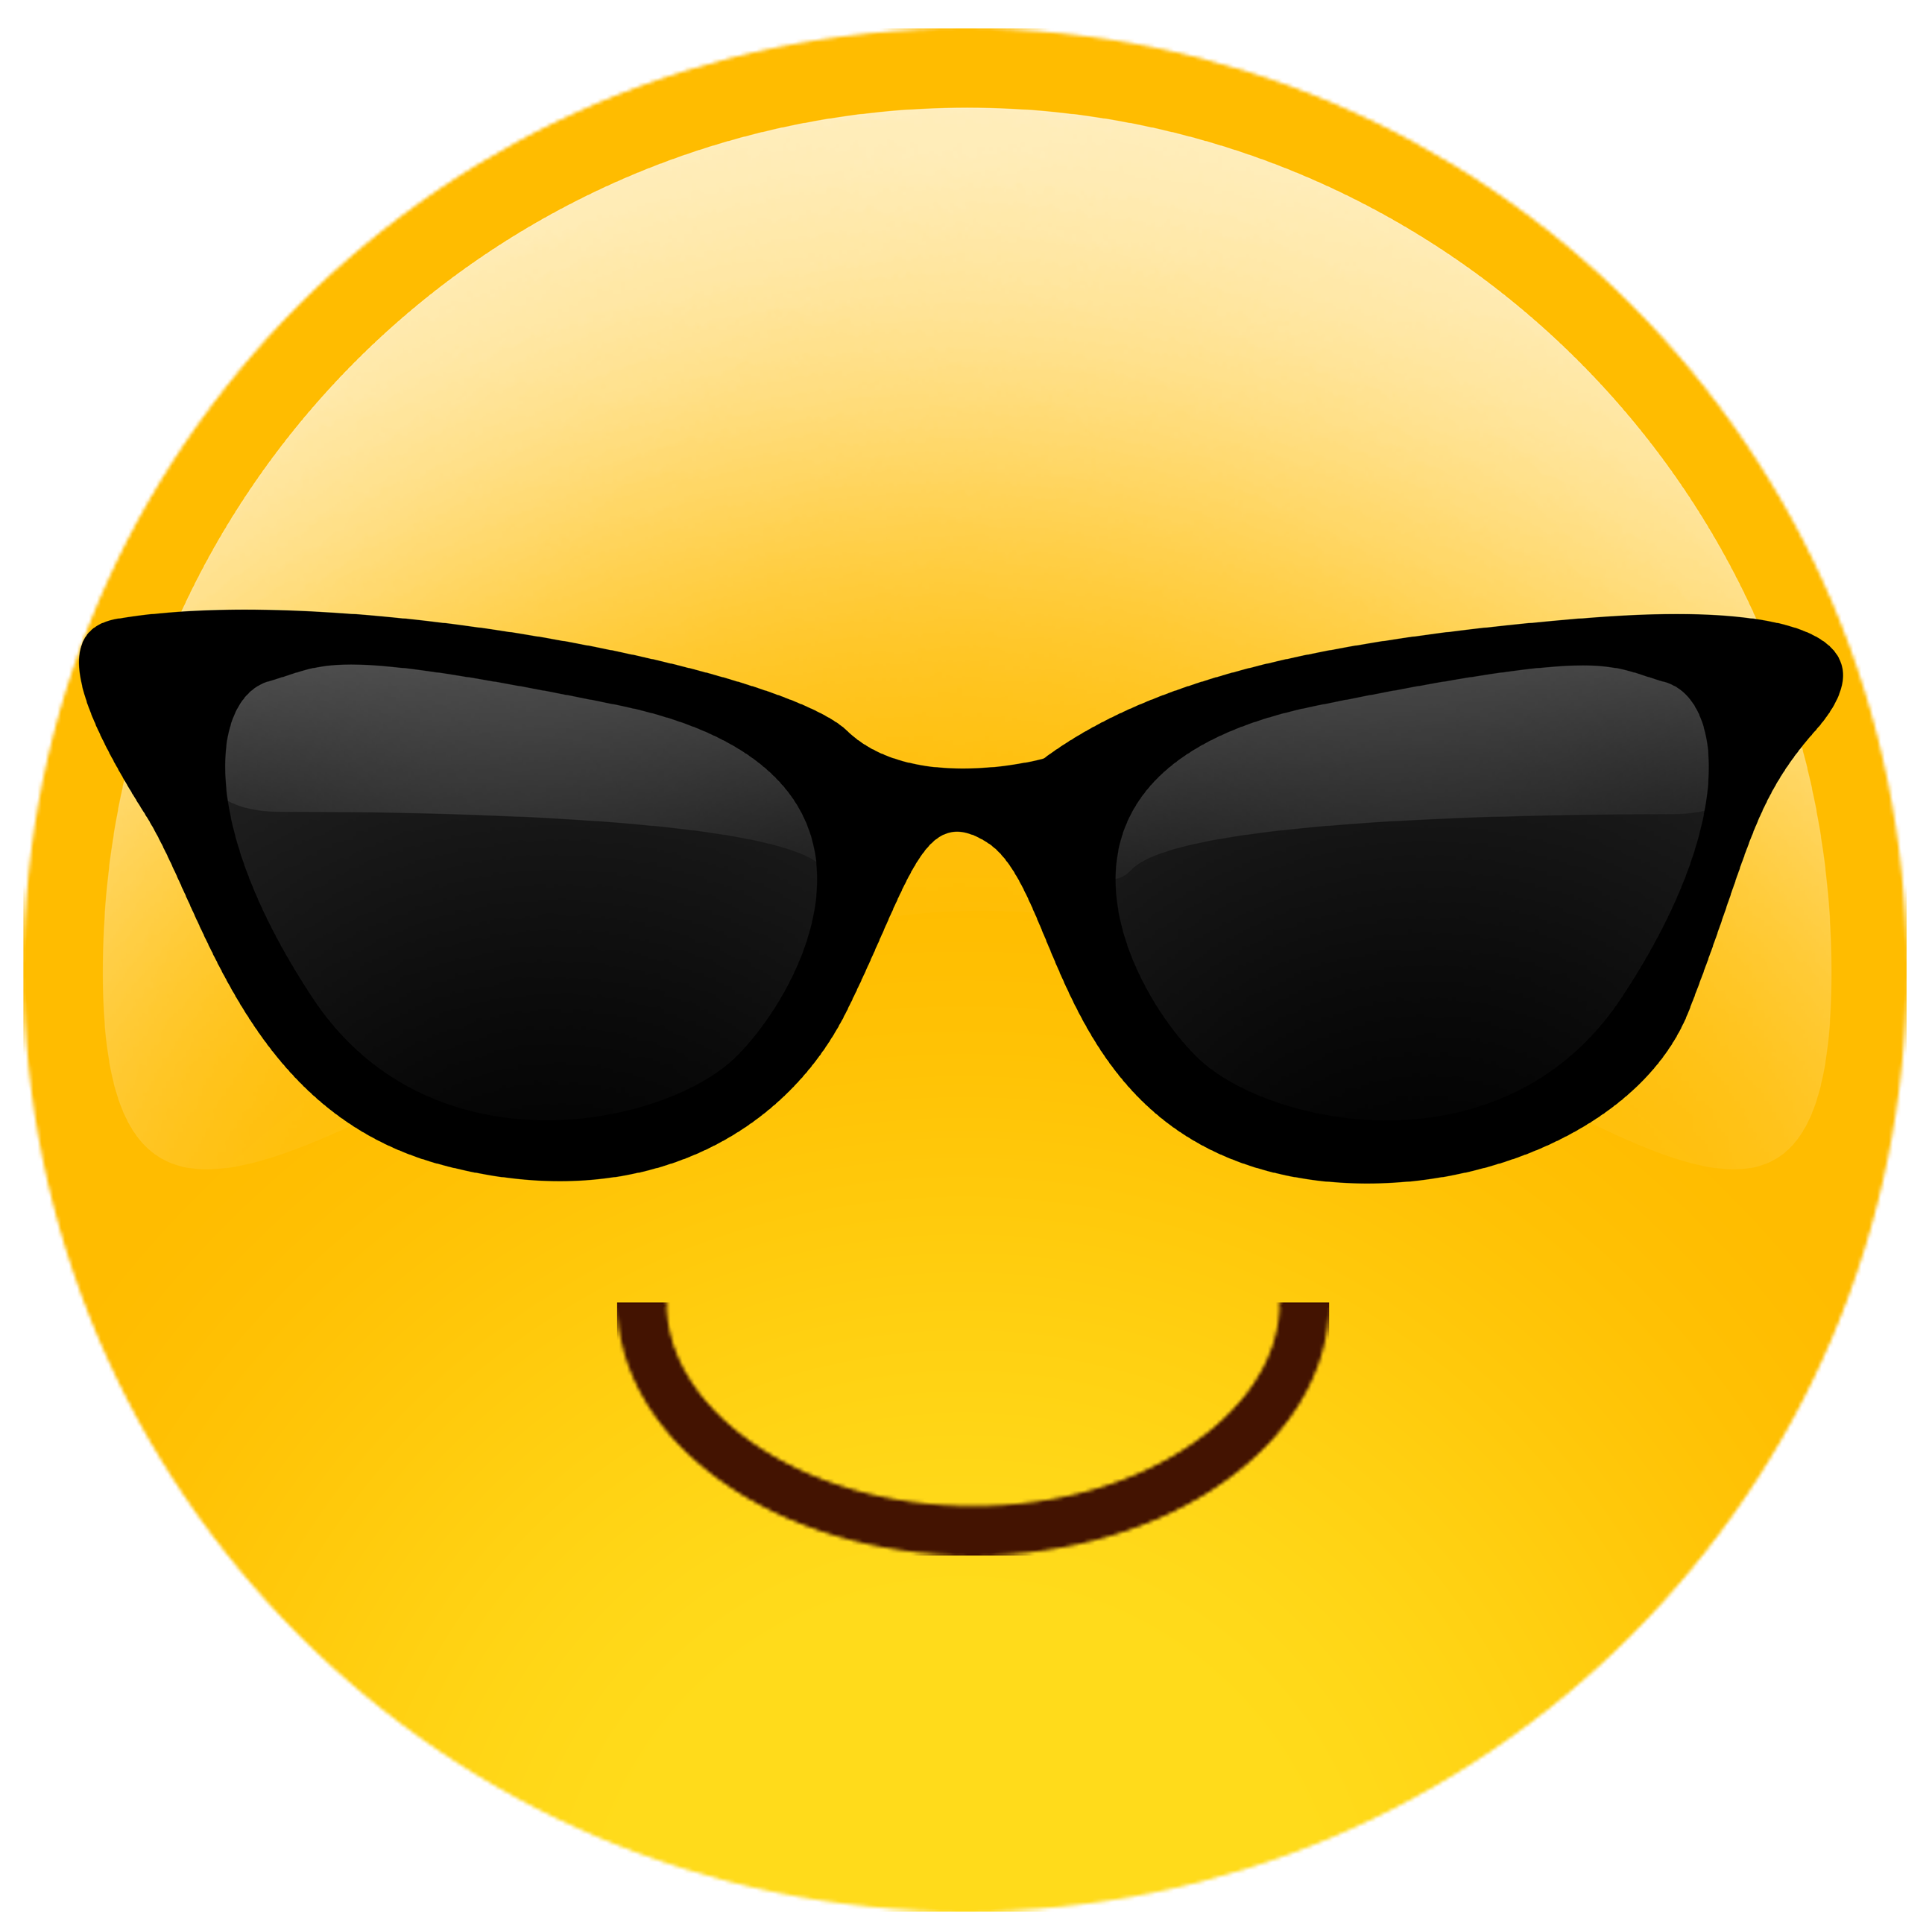 Download PNG image - Sunglasses Emoji PNG HD Quality 